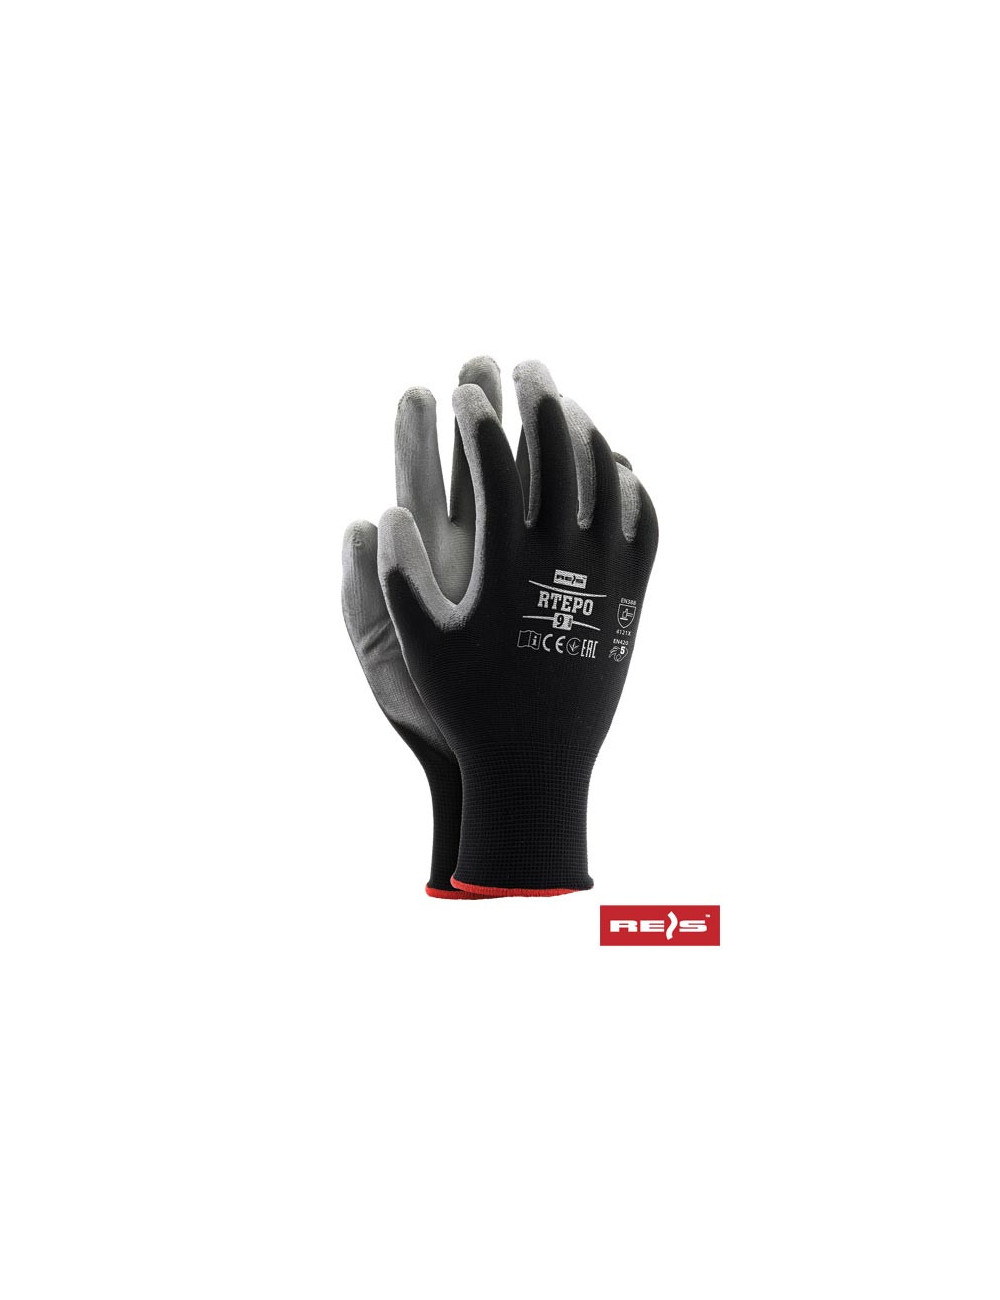 Protective gloves rtepo bs black-grey Reis